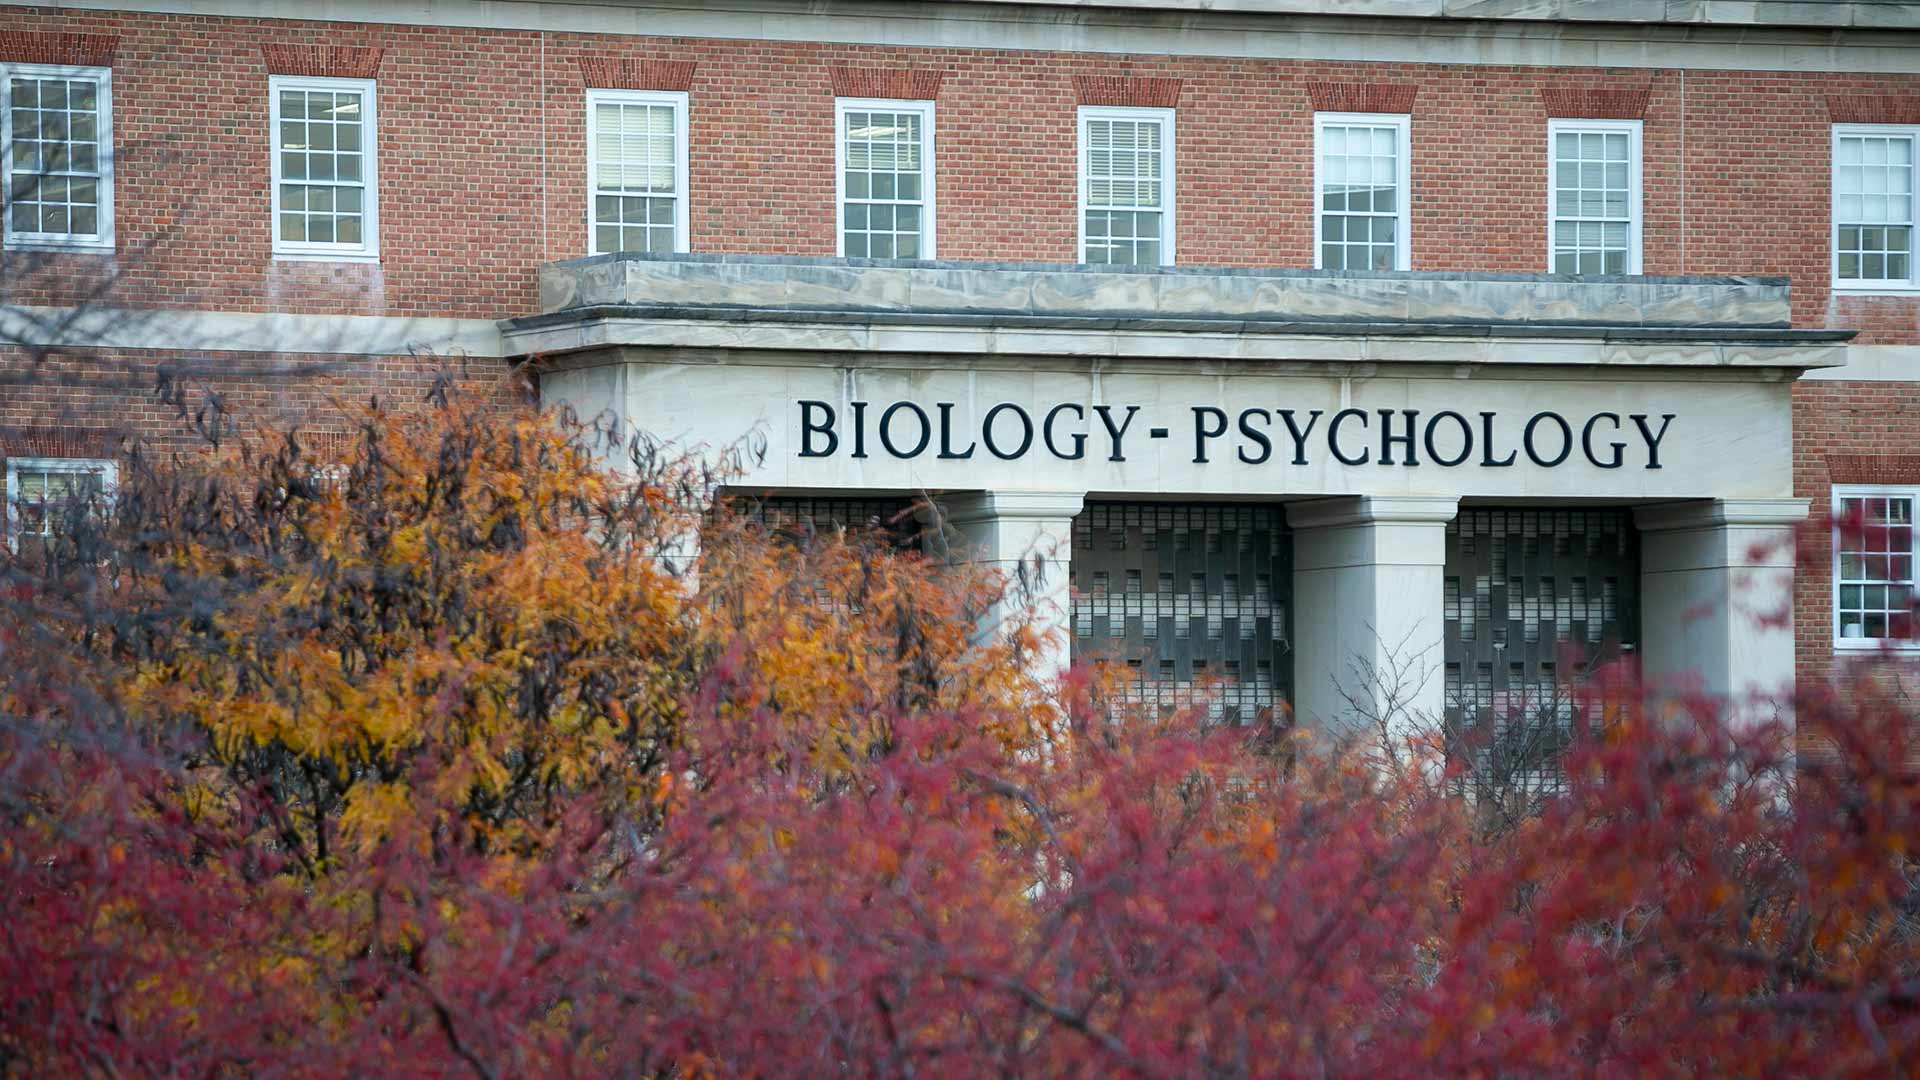 Biology-Psychology building